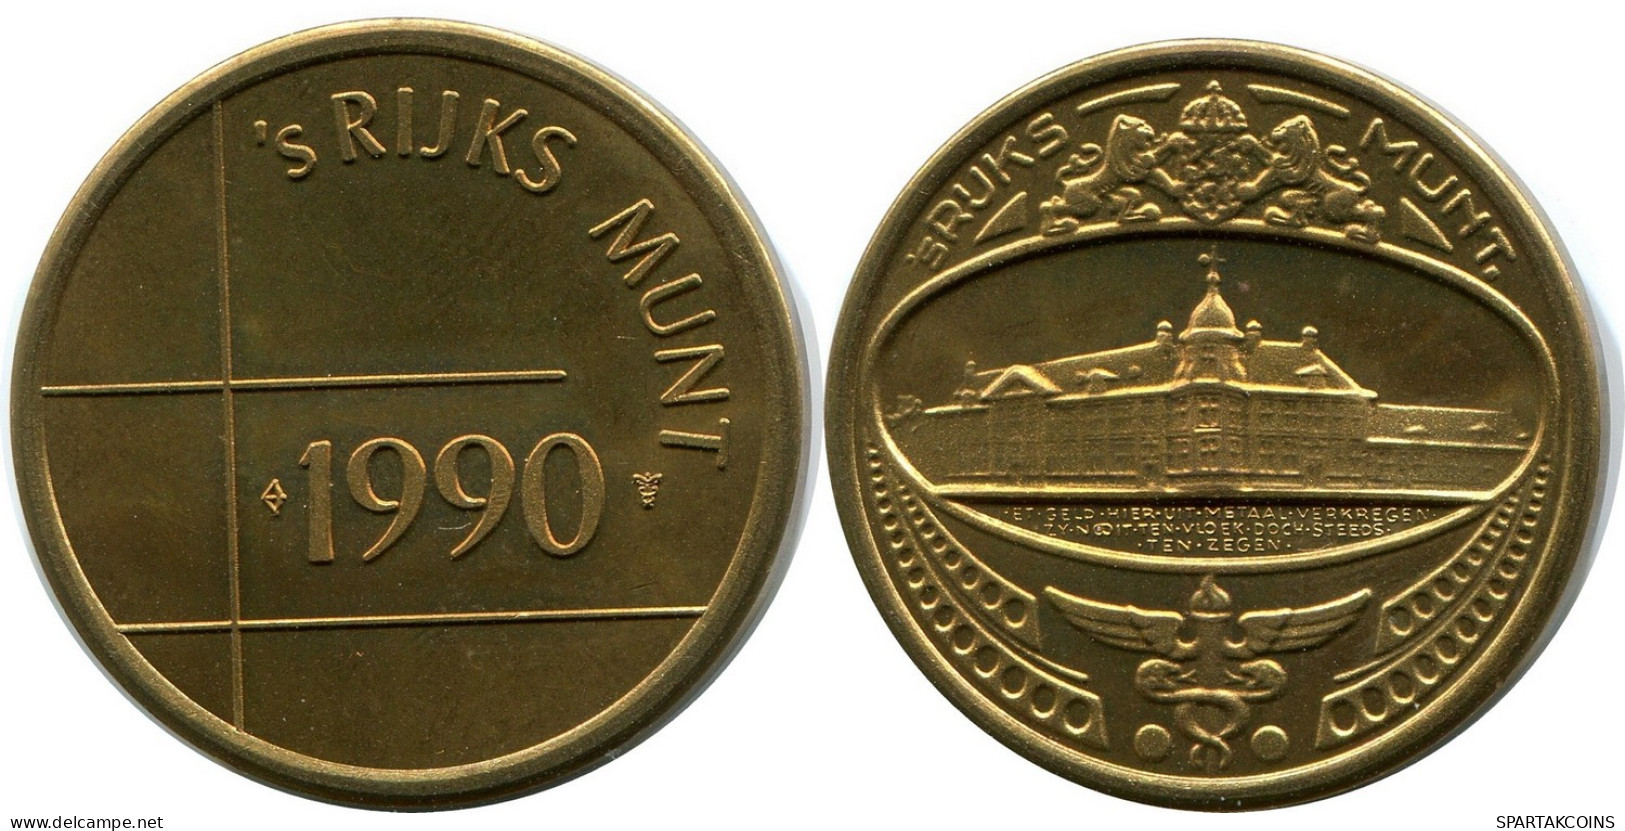 1990 ROYAL DUTCH MINT SET TOKEN NÉERLANDAIS NETHERLANDS MINT (From BU Mint Set) #AH029.F - [Sets Sin Usar &  Sets De Prueba